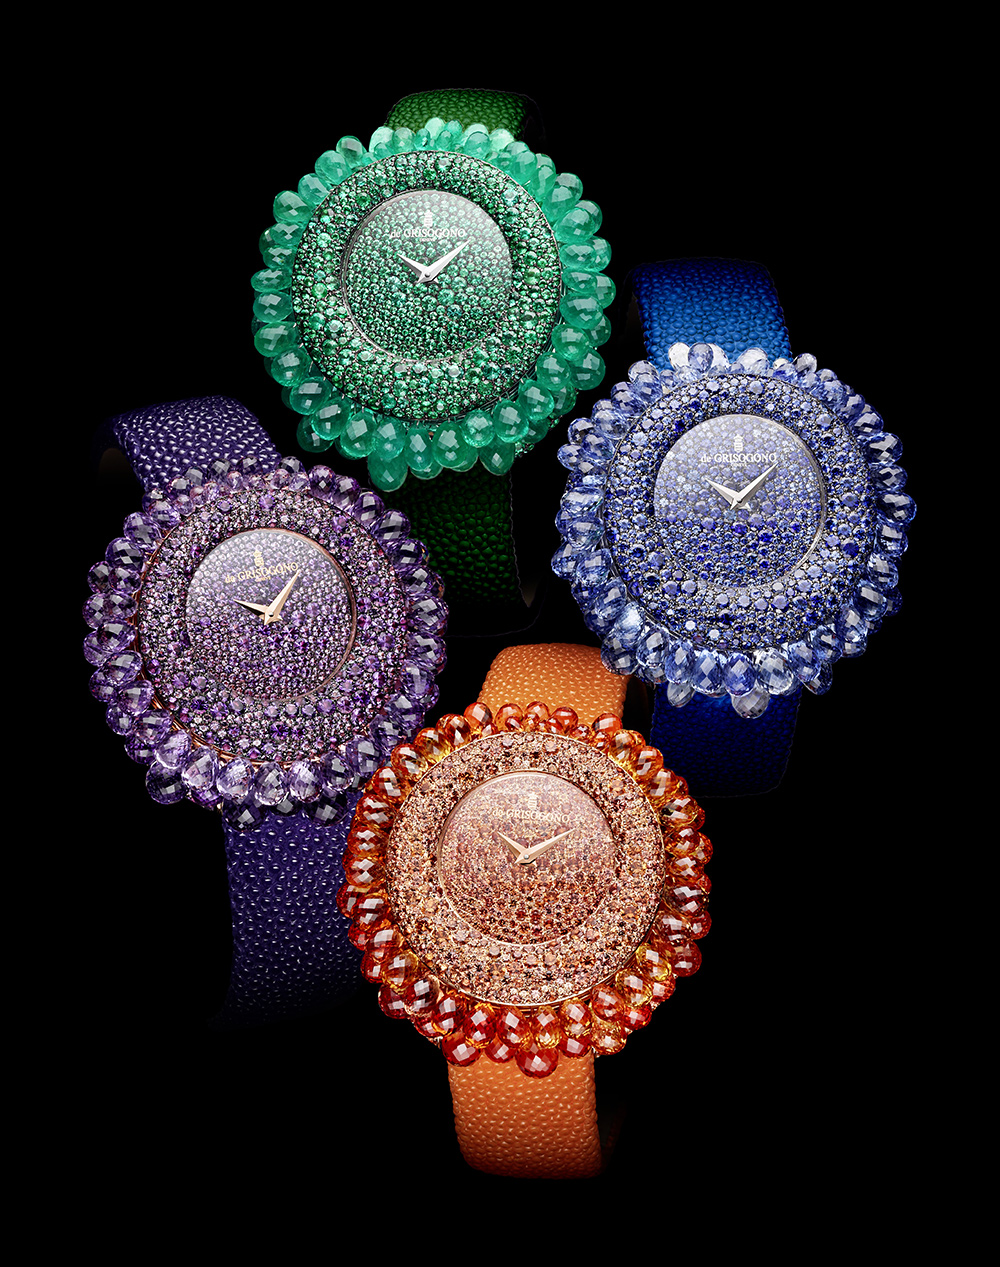 de Grisogono Grappoli watch with orange sapphires, amethysts, emeralds, blue sapphires